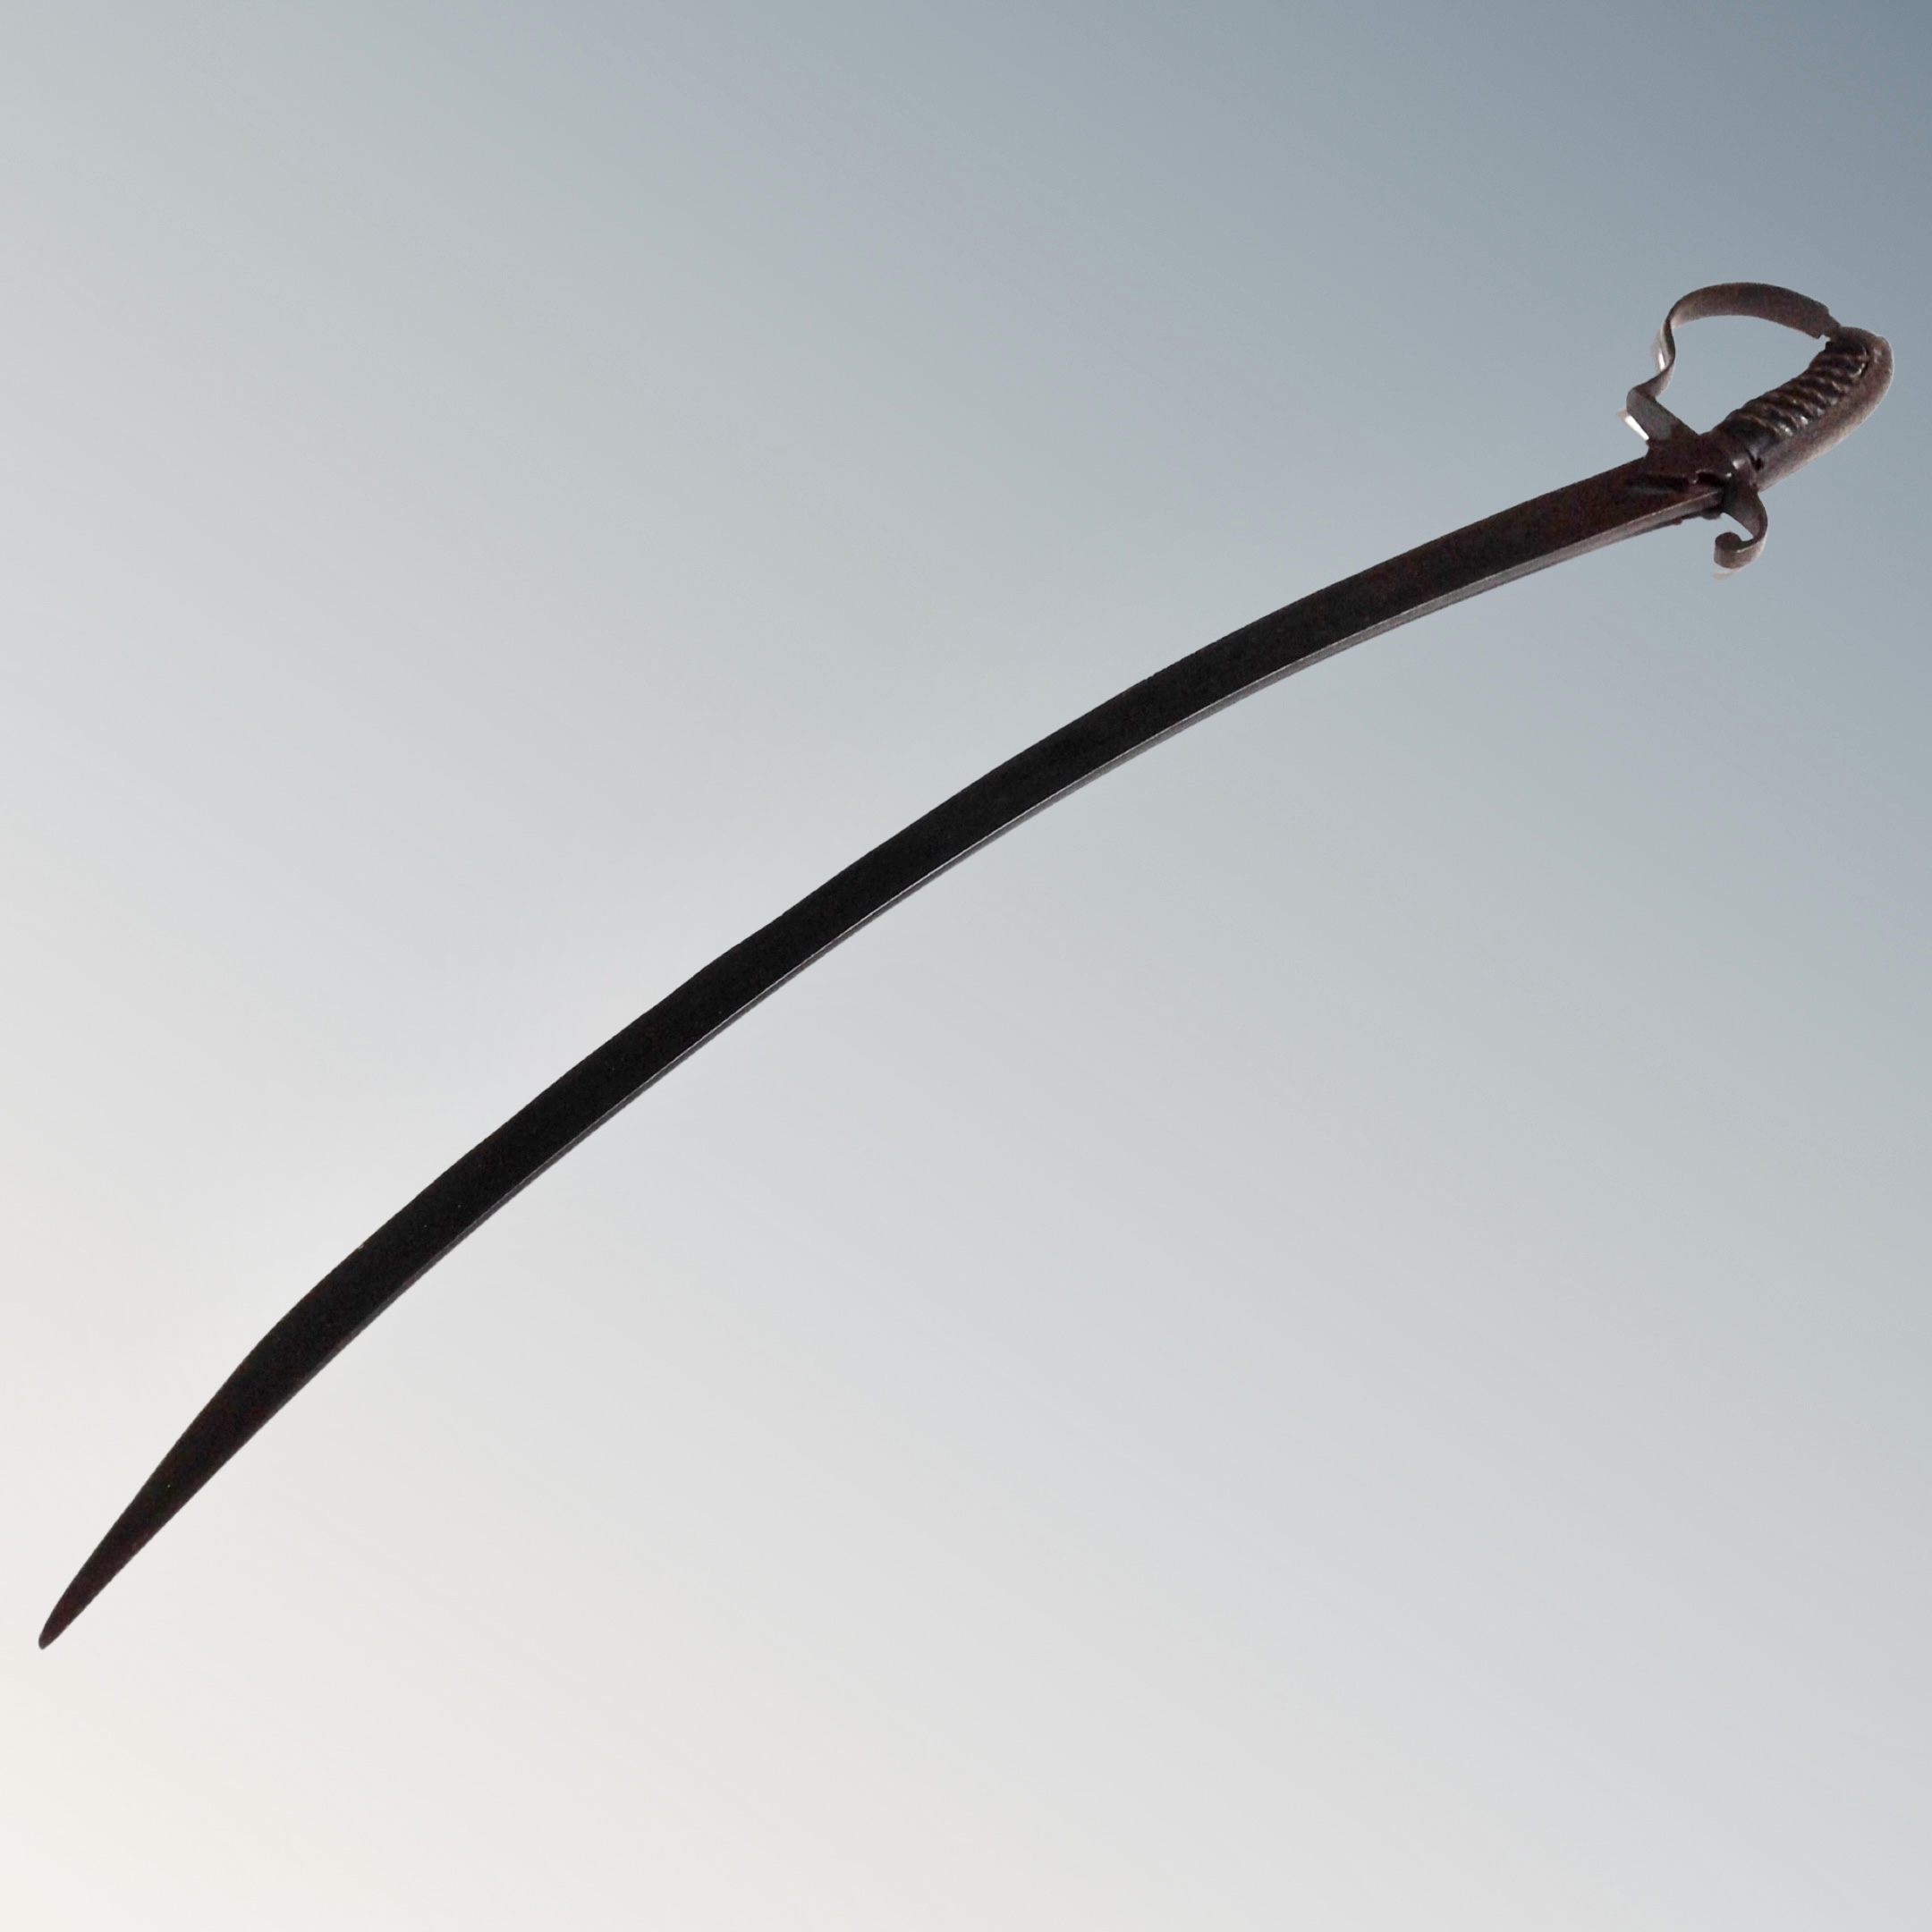 A Georgian cavalry sword